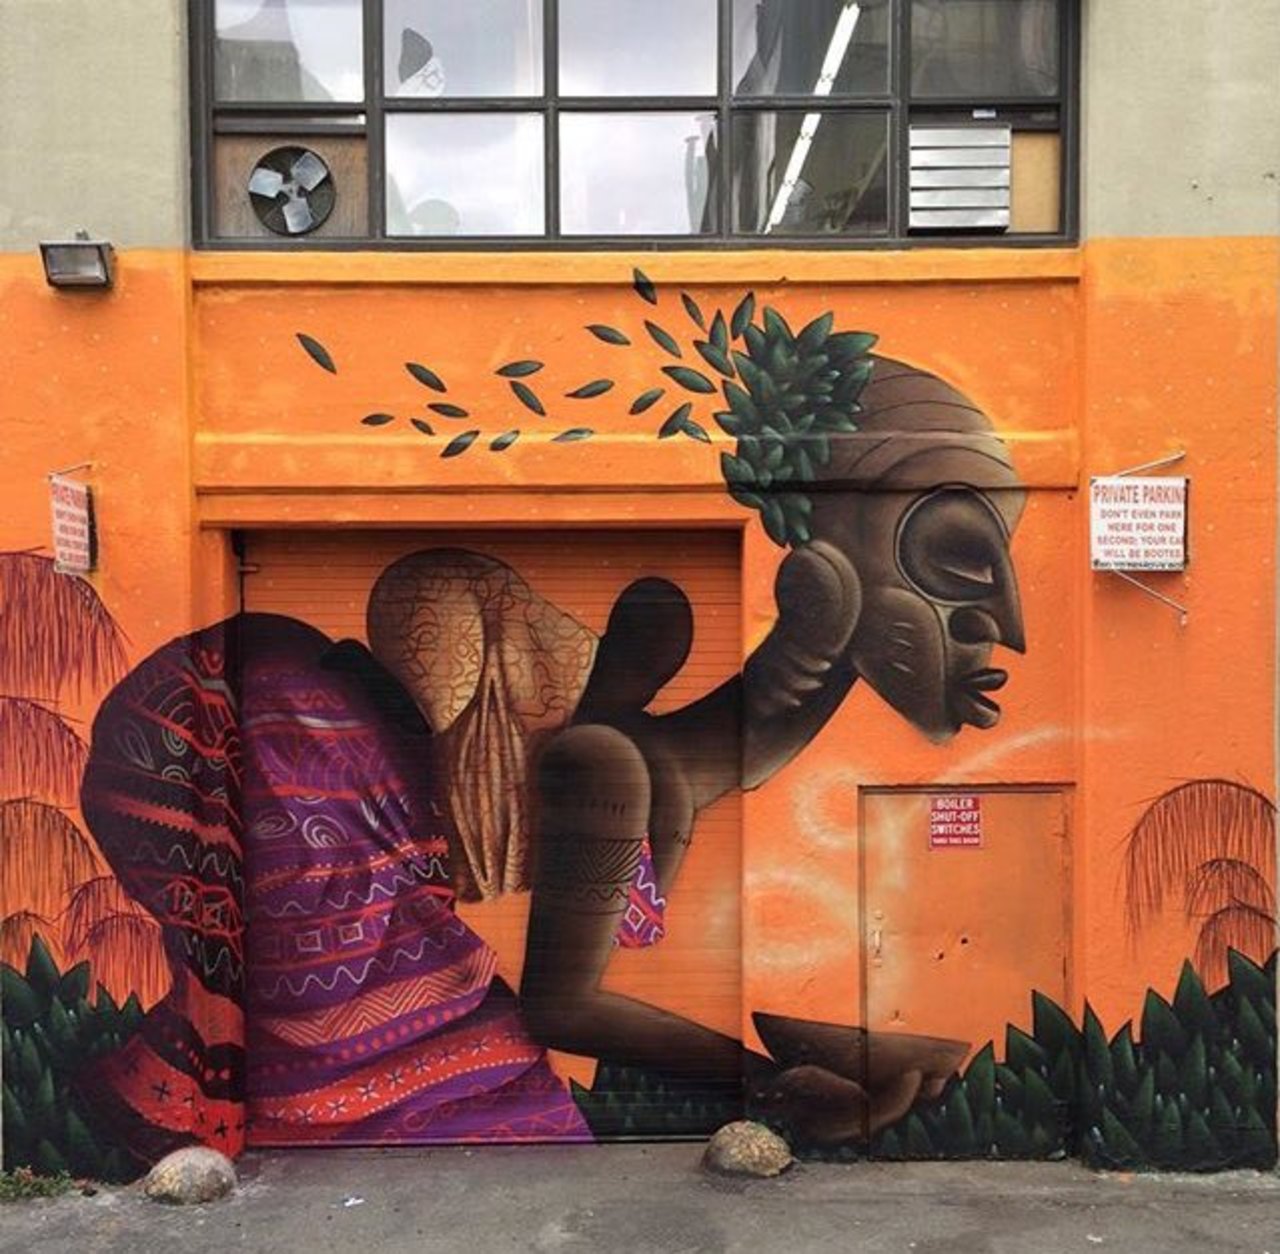 #satvadesignstudio : New Street Art by Alexandre Keto in NYC 

#art #graffiti #mural #streetart https://t.co/u0e41YOQtS